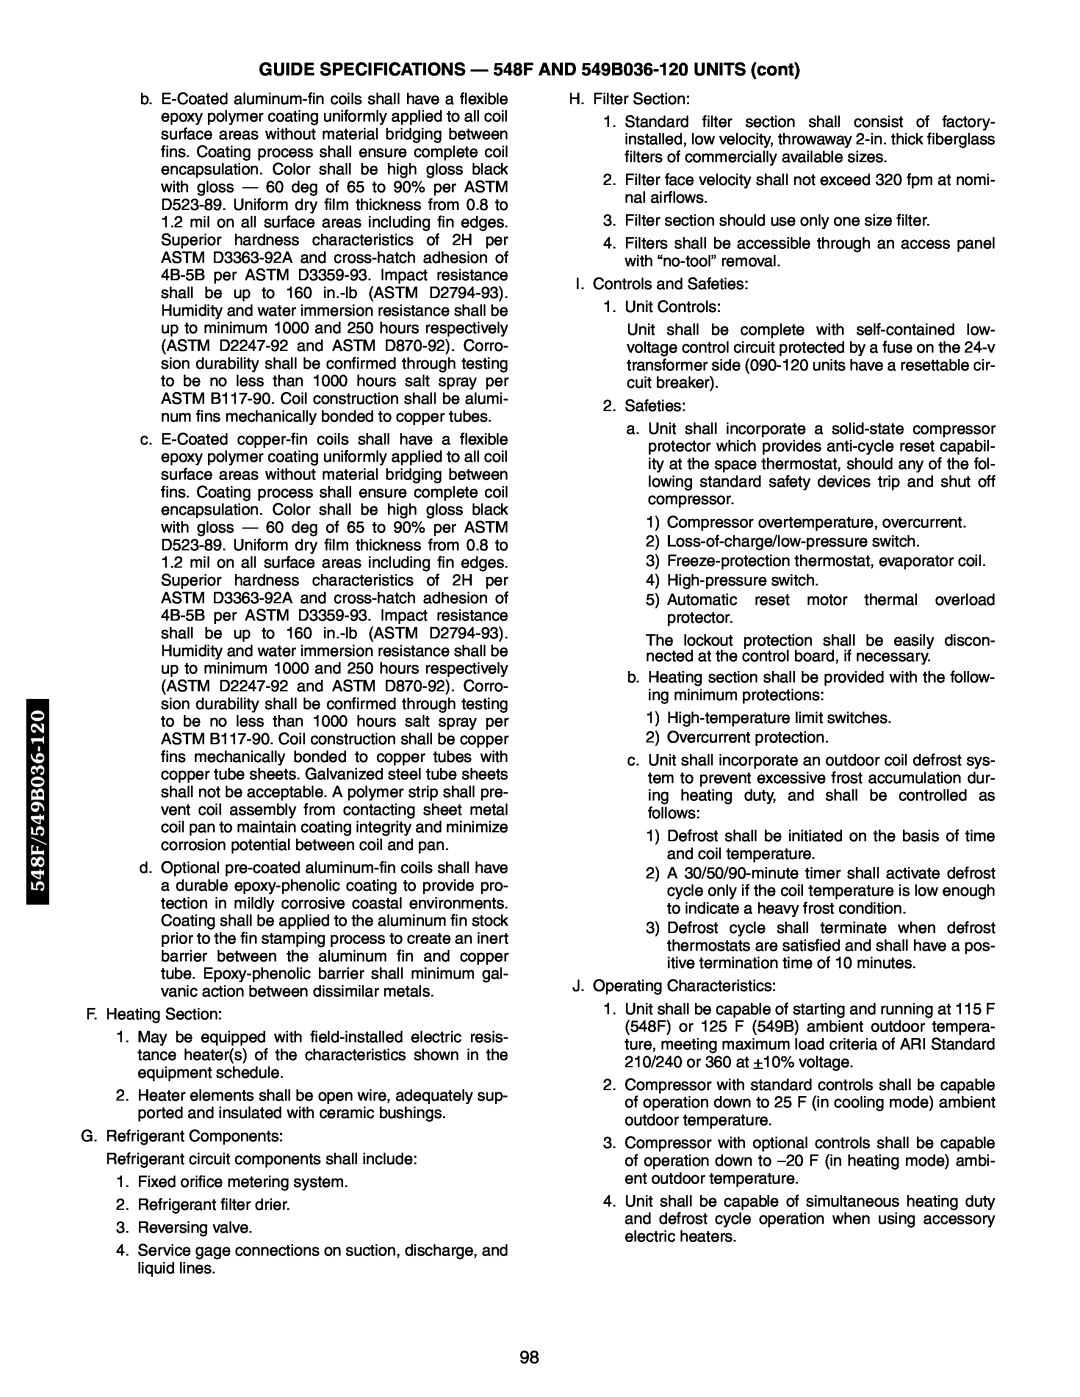 Bryant 542J manual 548F/549B036-120, F.Heating Section 